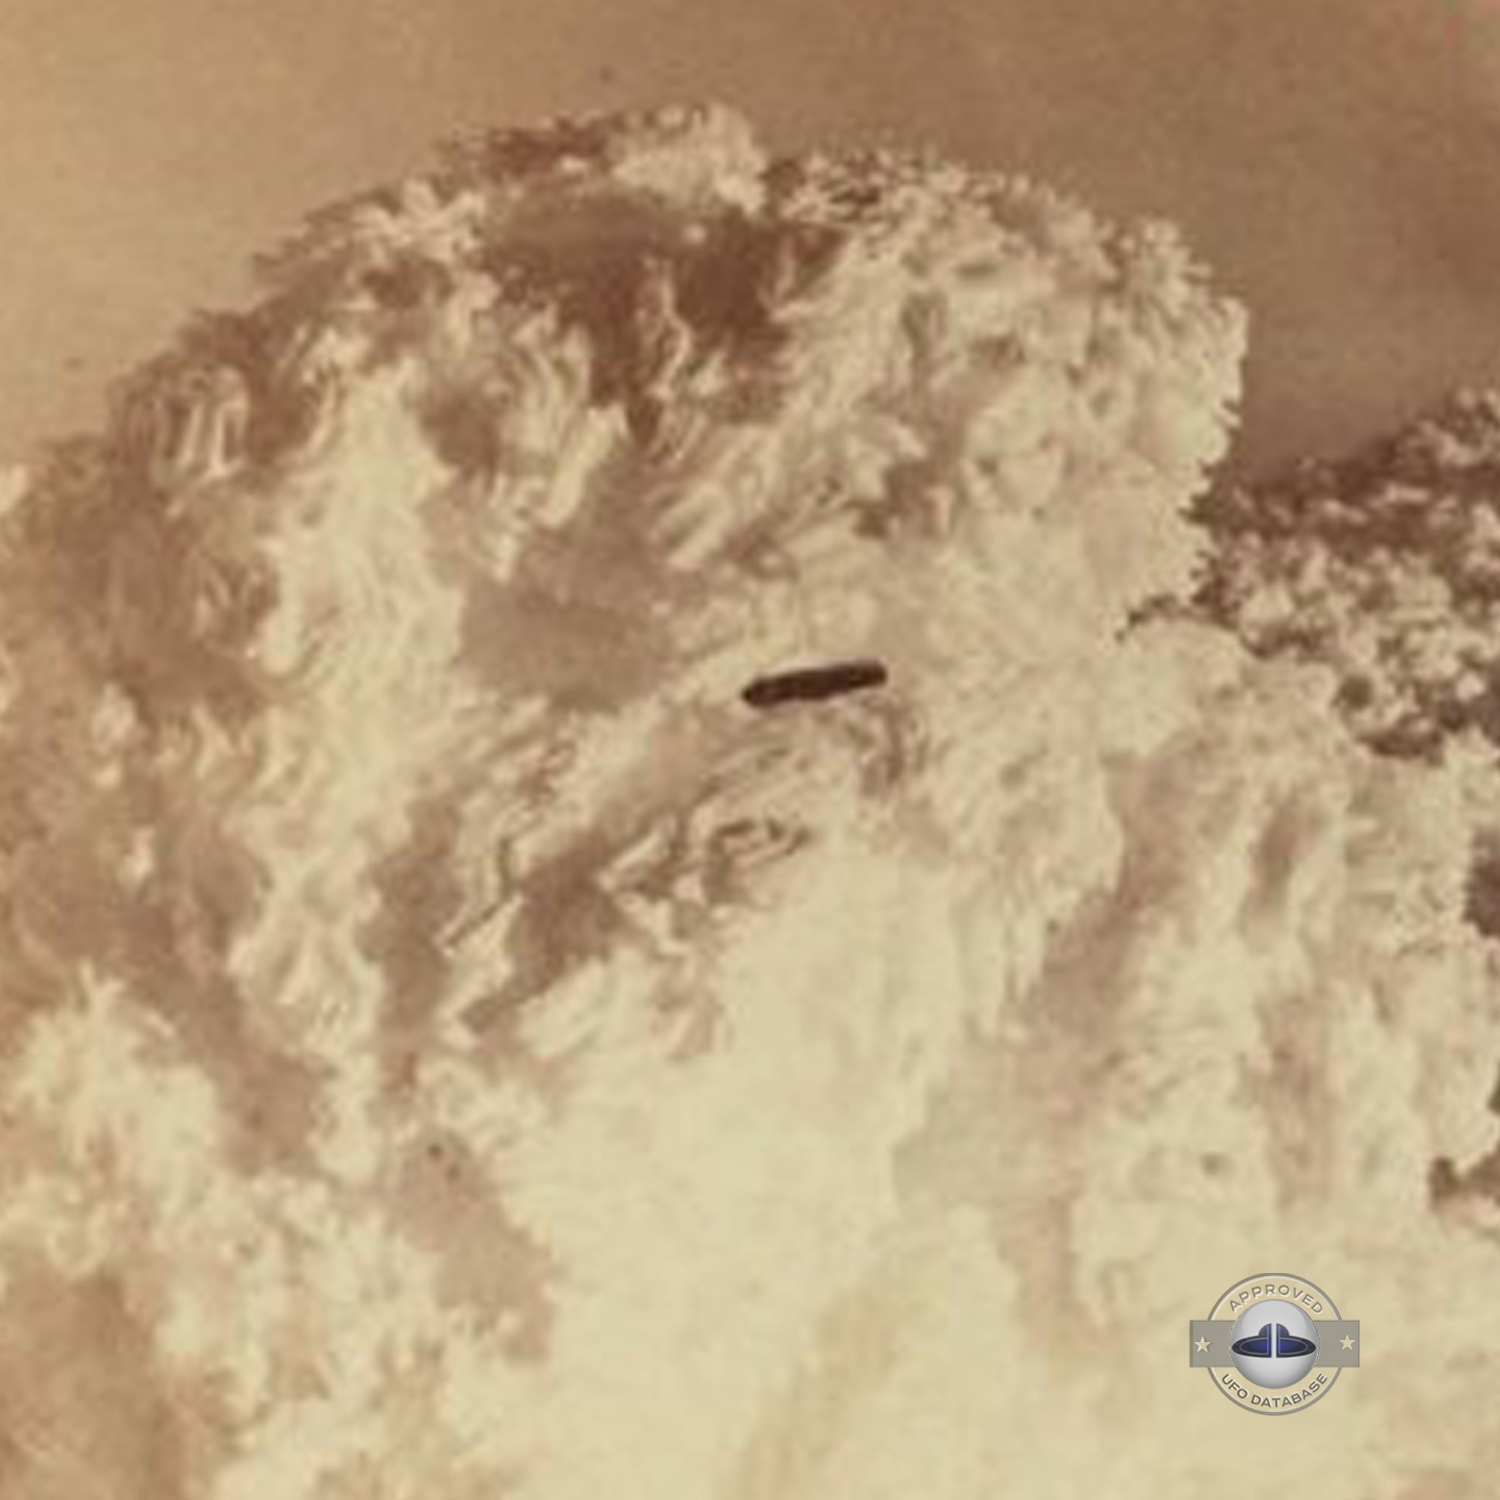 Oldest UFO Picture | Winter 1870 | Mount Washington, New Hampshire UFO Picture #110-4